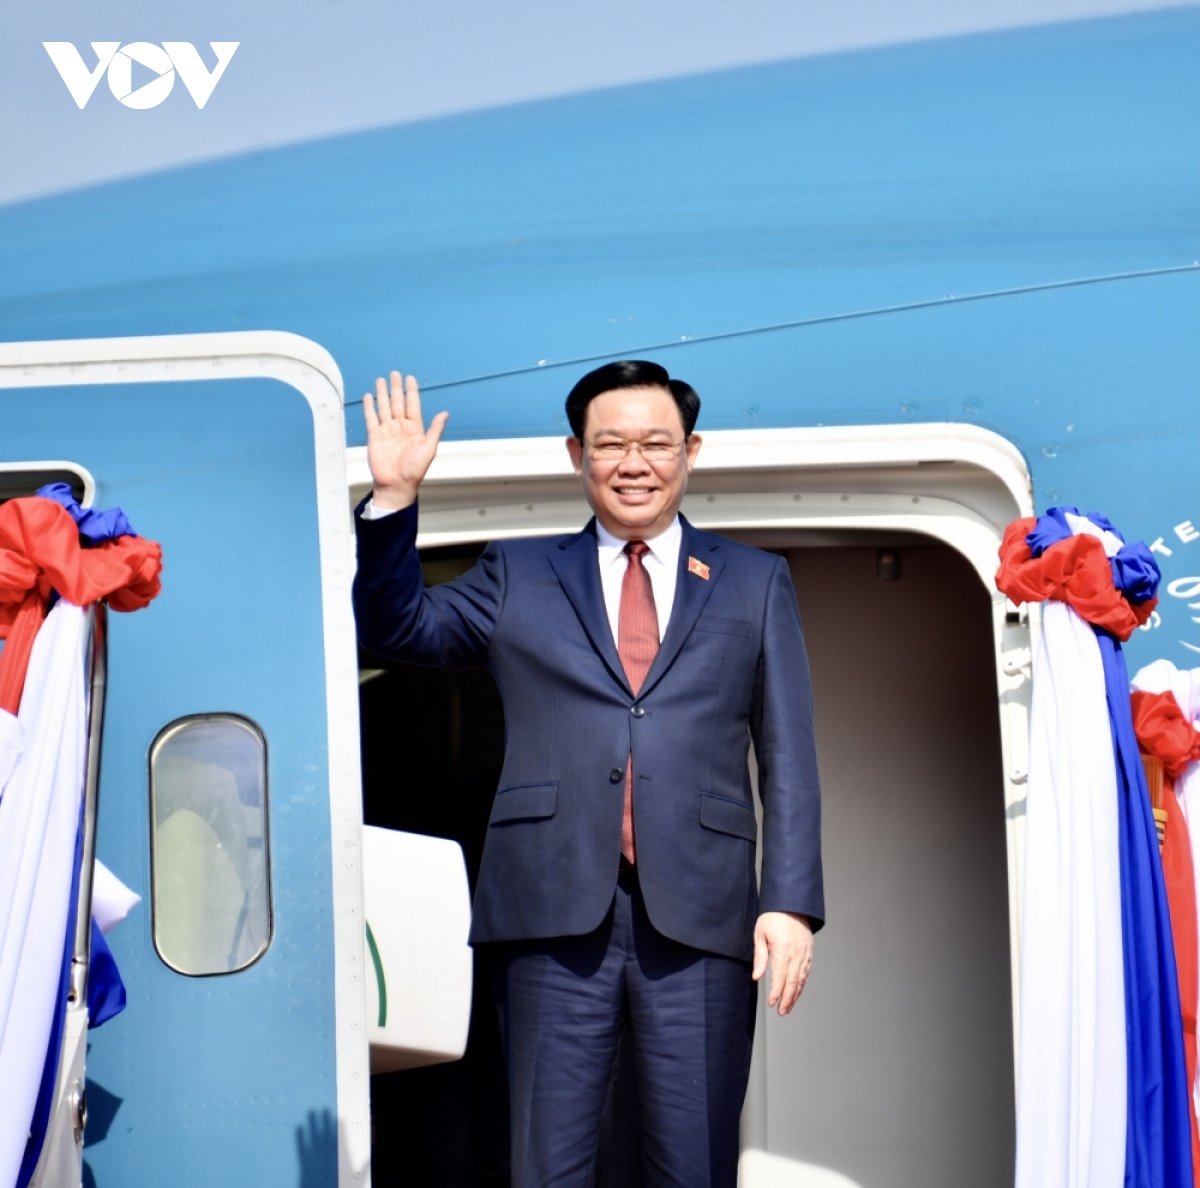 top vietnamese legislator arrives in vientiane for the clv summit and laos visit picture 1